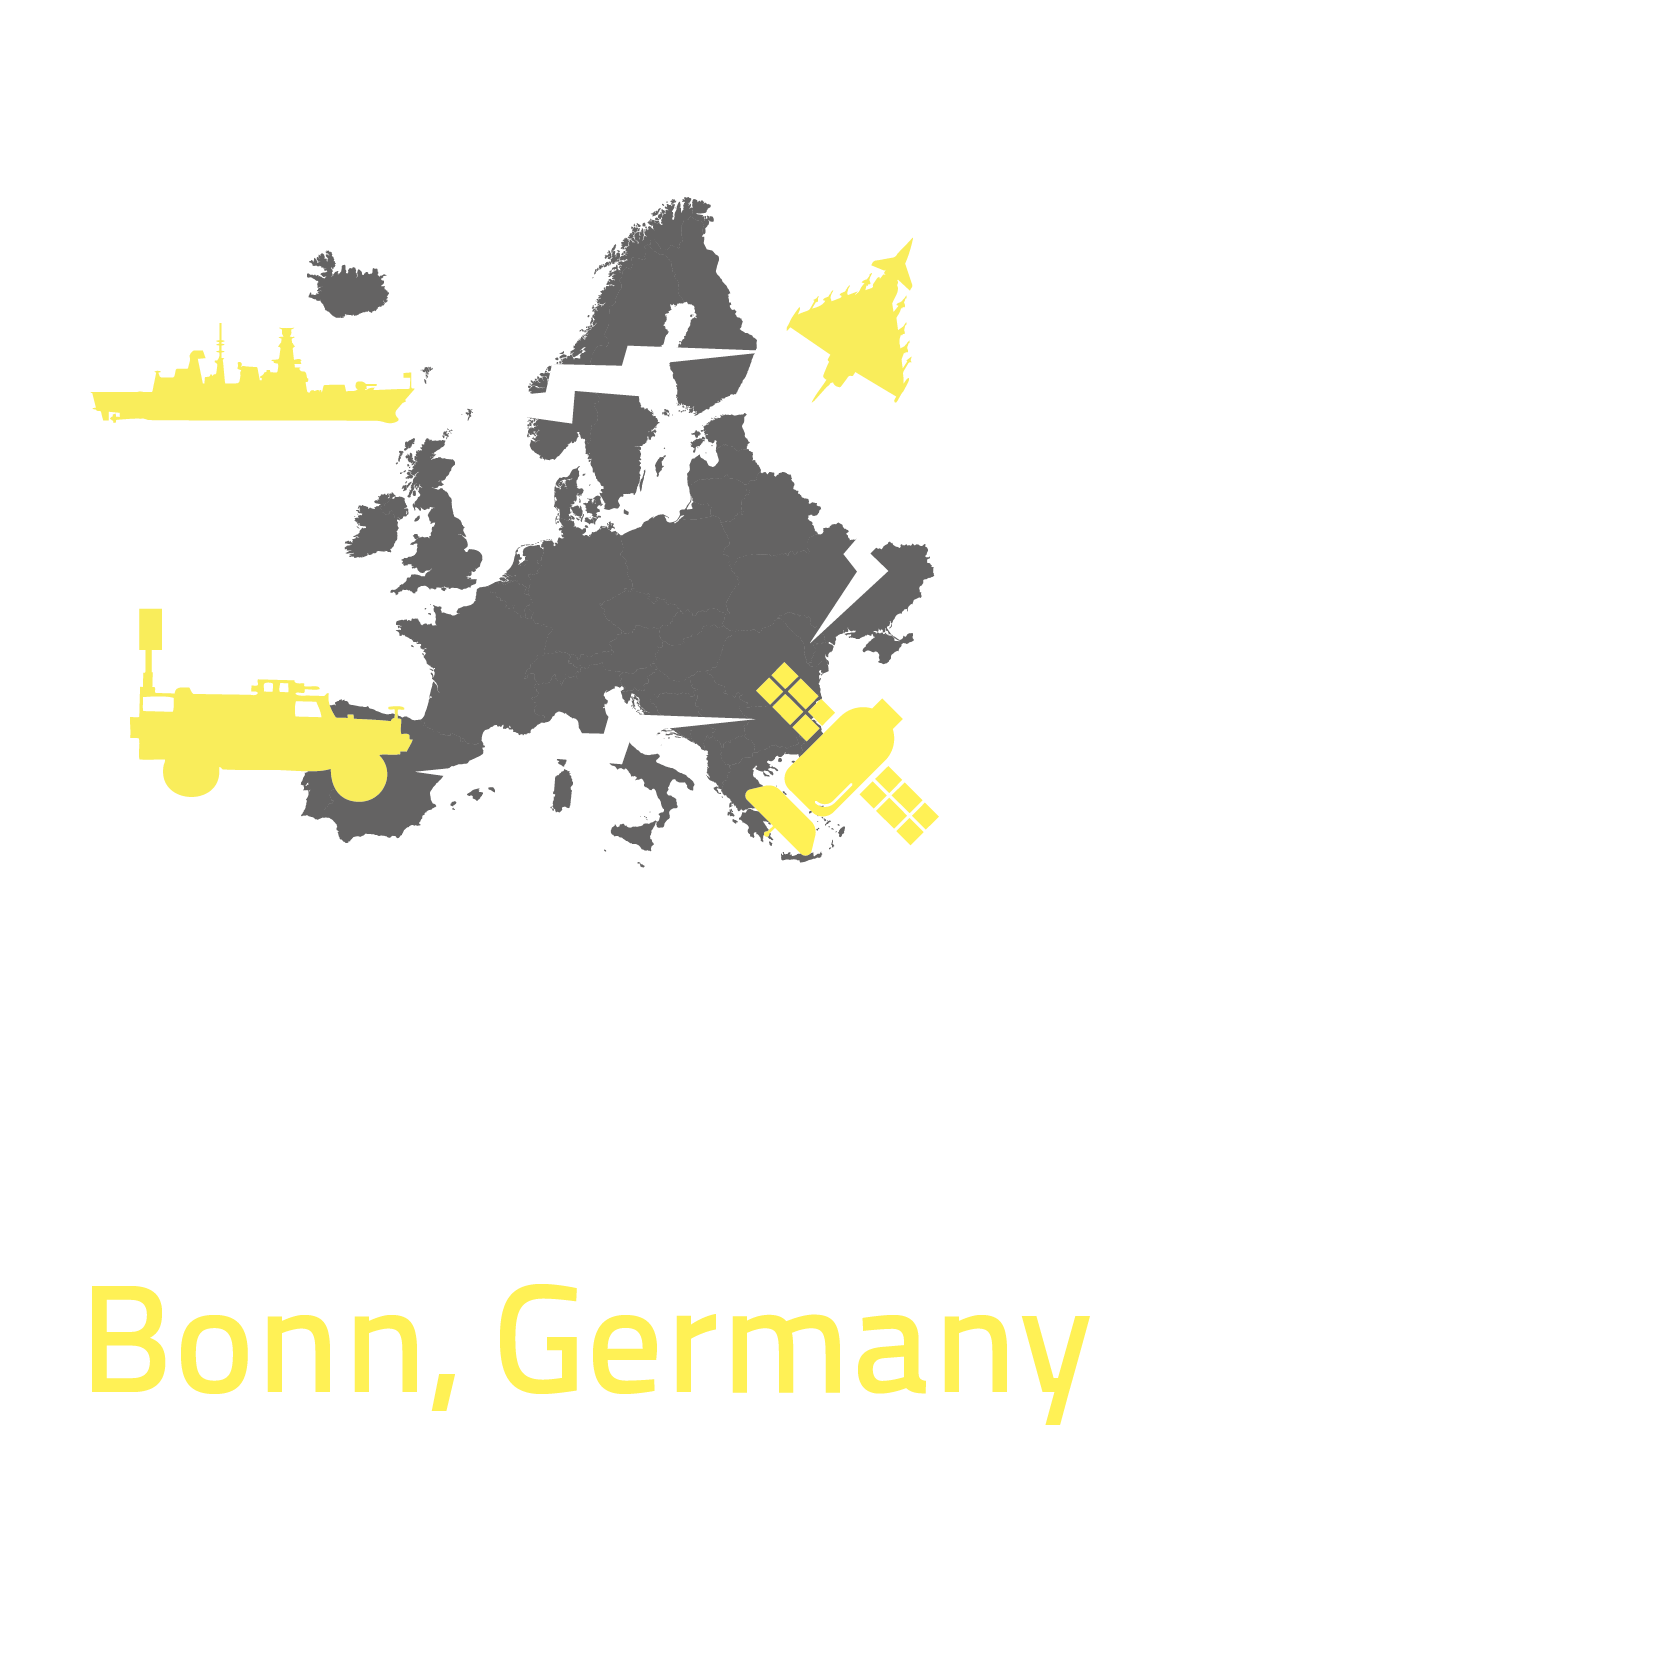 AOC Europe 2023